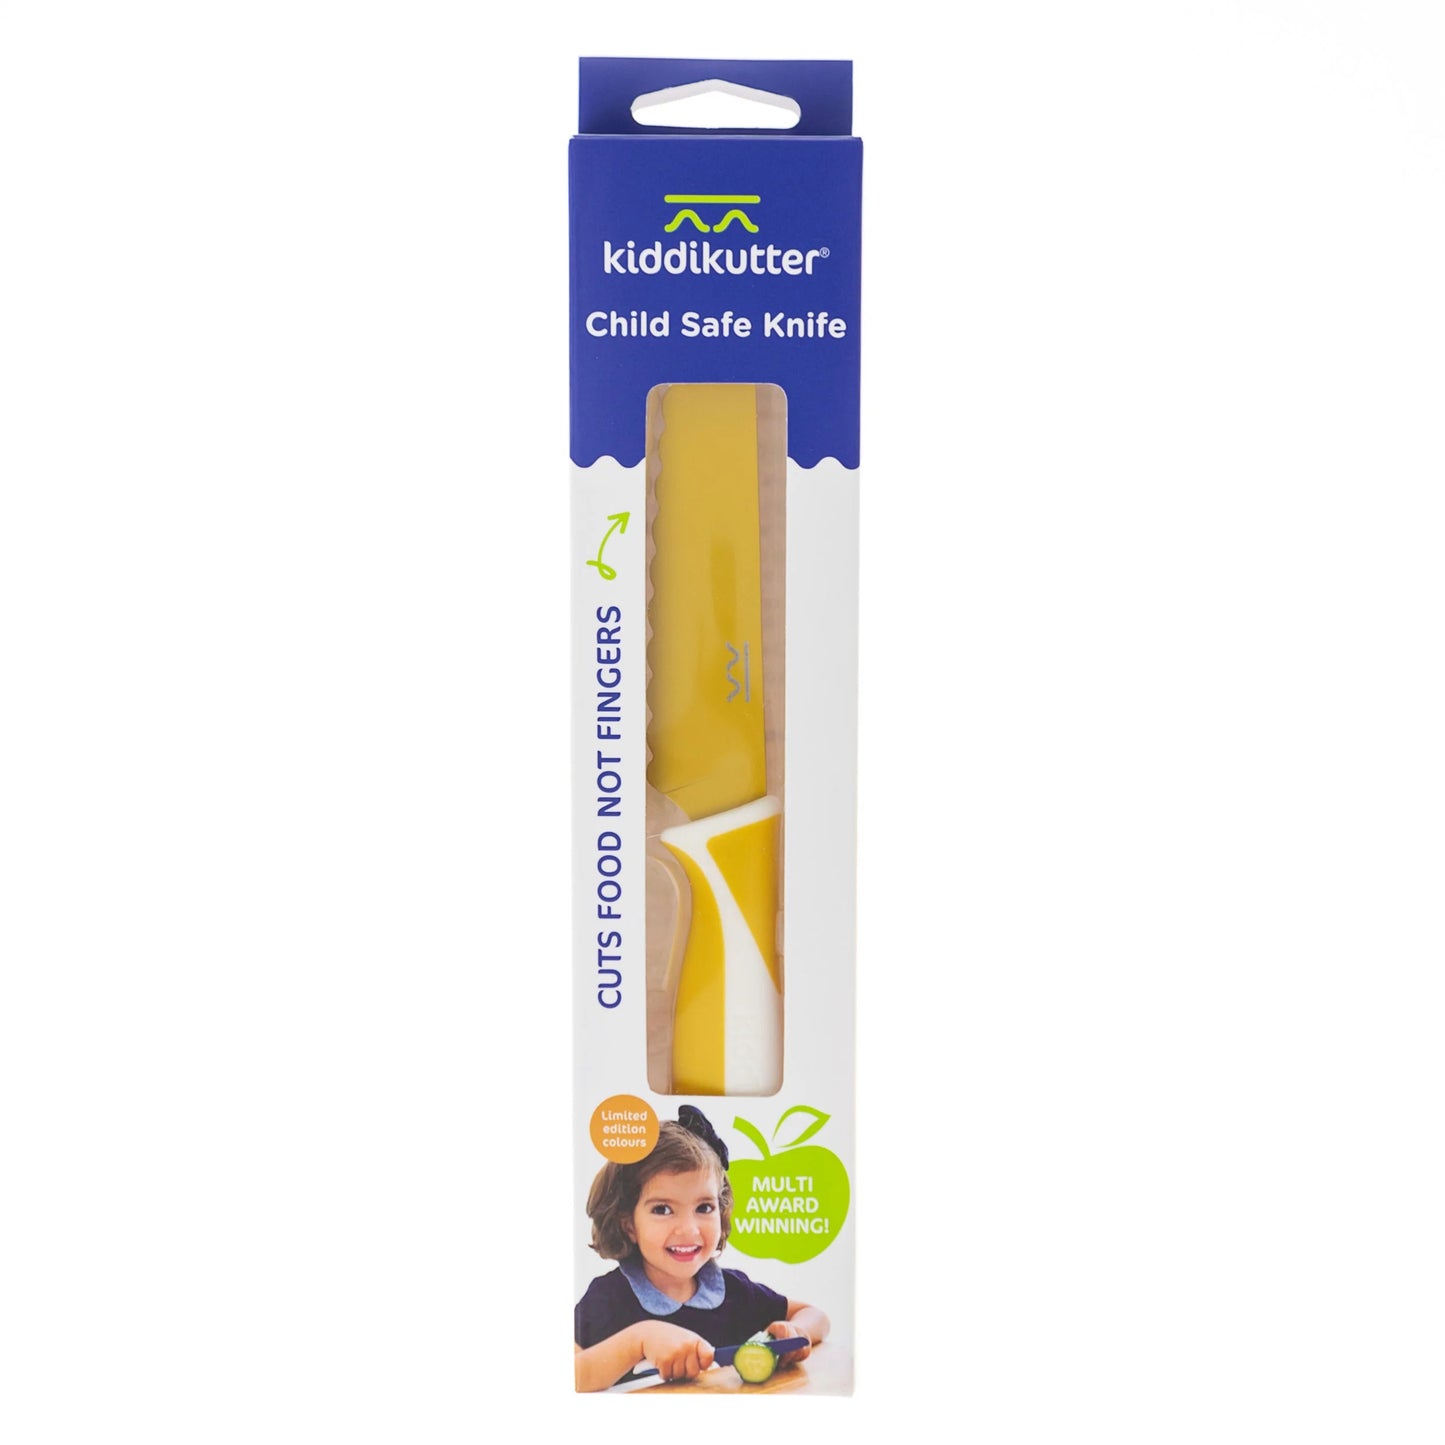 KiddiKutter Knife - Mustard (Limited Edition) - Prepp'd Kids - KiddiKutter